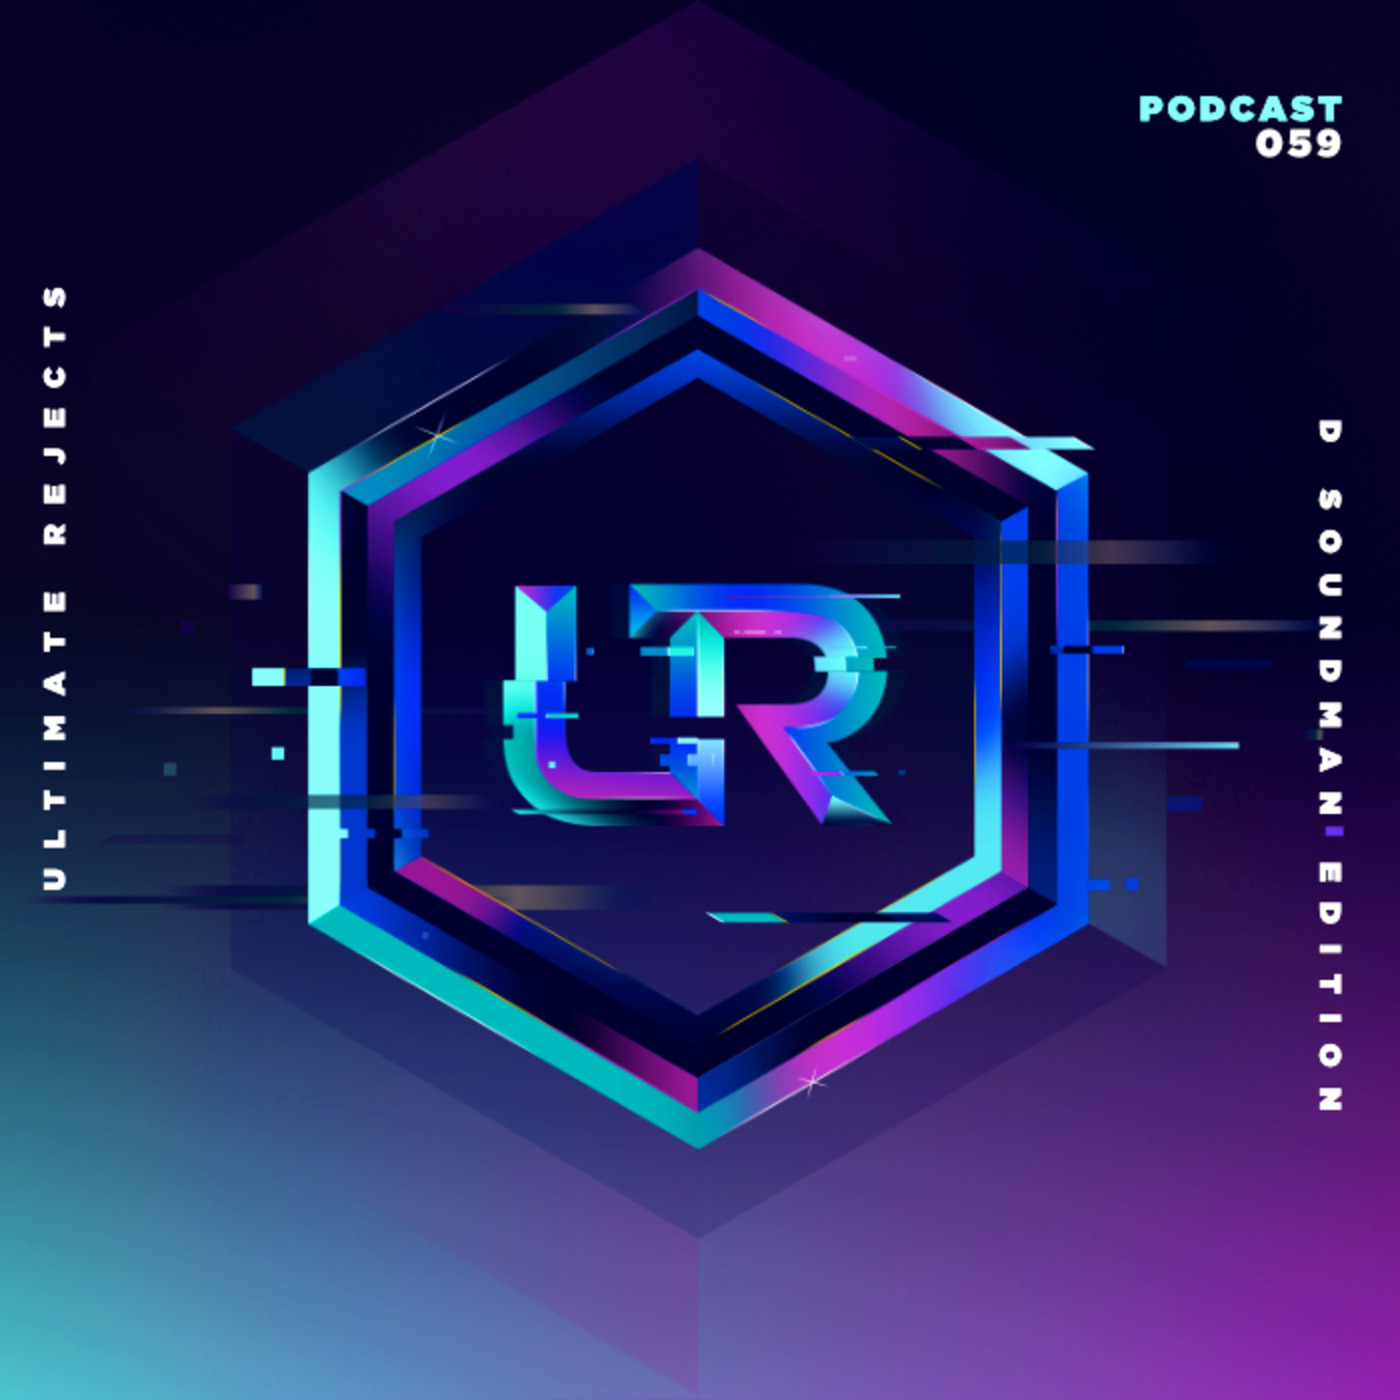 Ultimate Rejects UR Podcast 059 (D Soundman Edition)